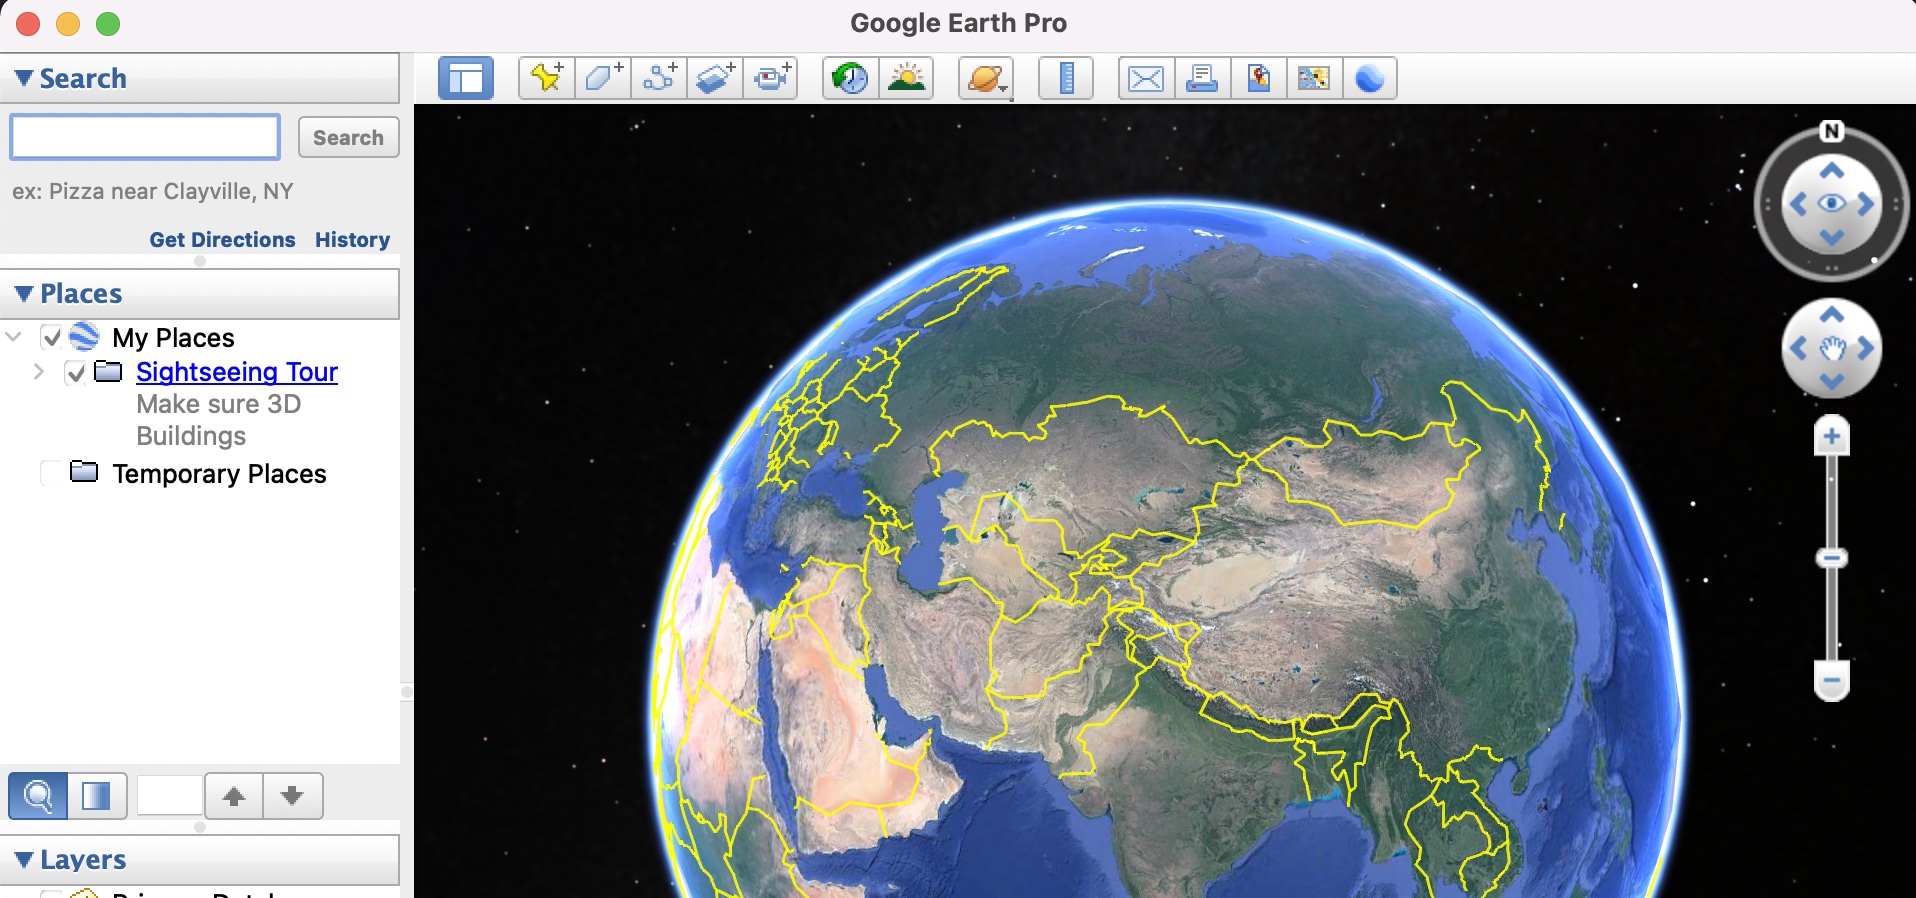 Google Earth ပေါ်က ပုံတွေ ဘာဖြစ်သွားလဲ။